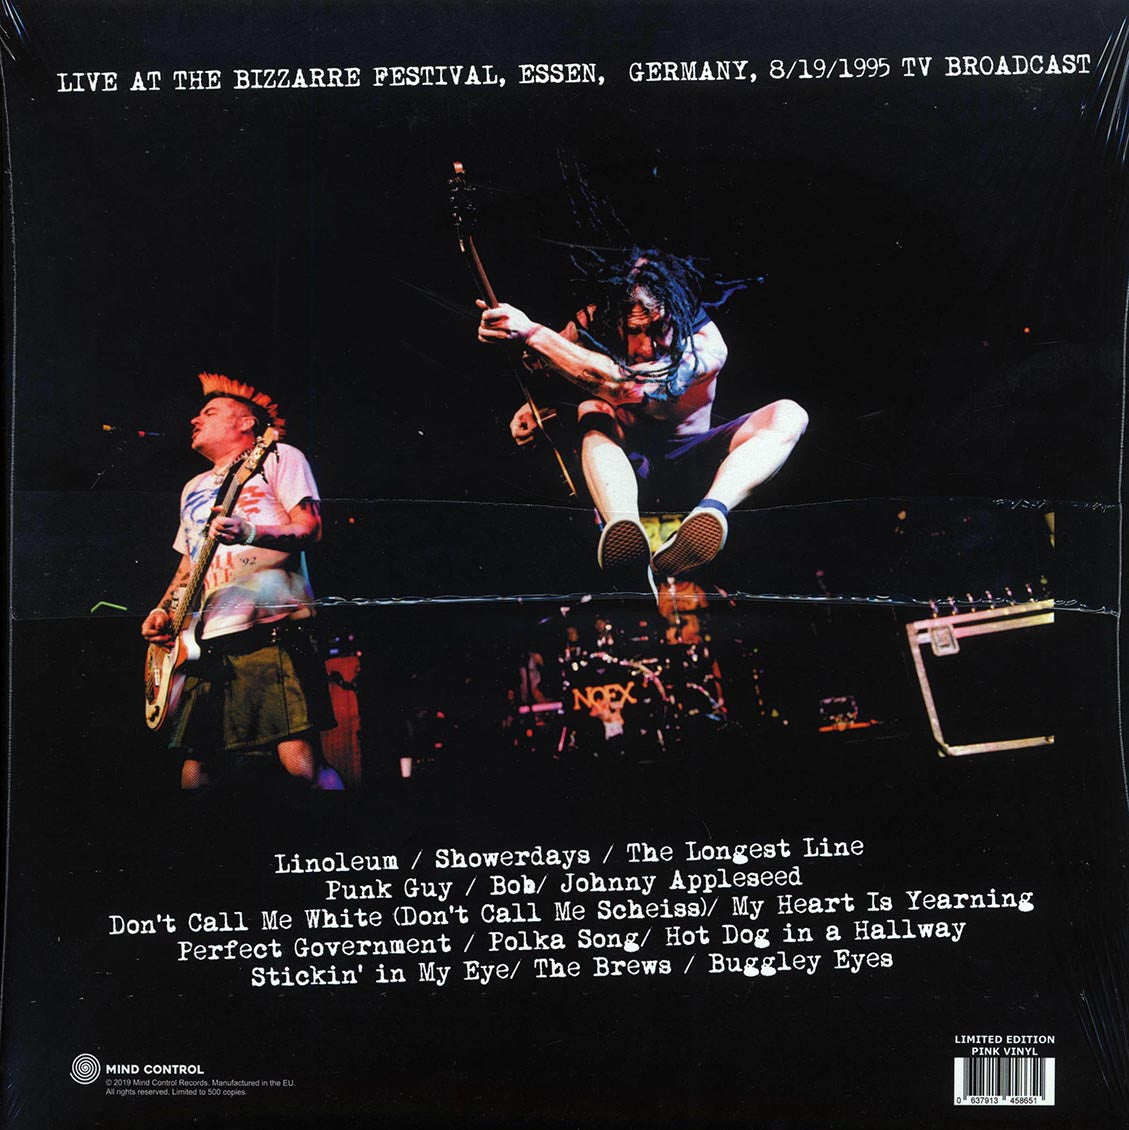 NOFX - American Drugs & German Beers: Live At The Bizzarre Festival, Essen, Germany, 8/19/1995 TV Broadcast (ltd. 500 copies made) (pink vinyl) - Vinyl LP, LP